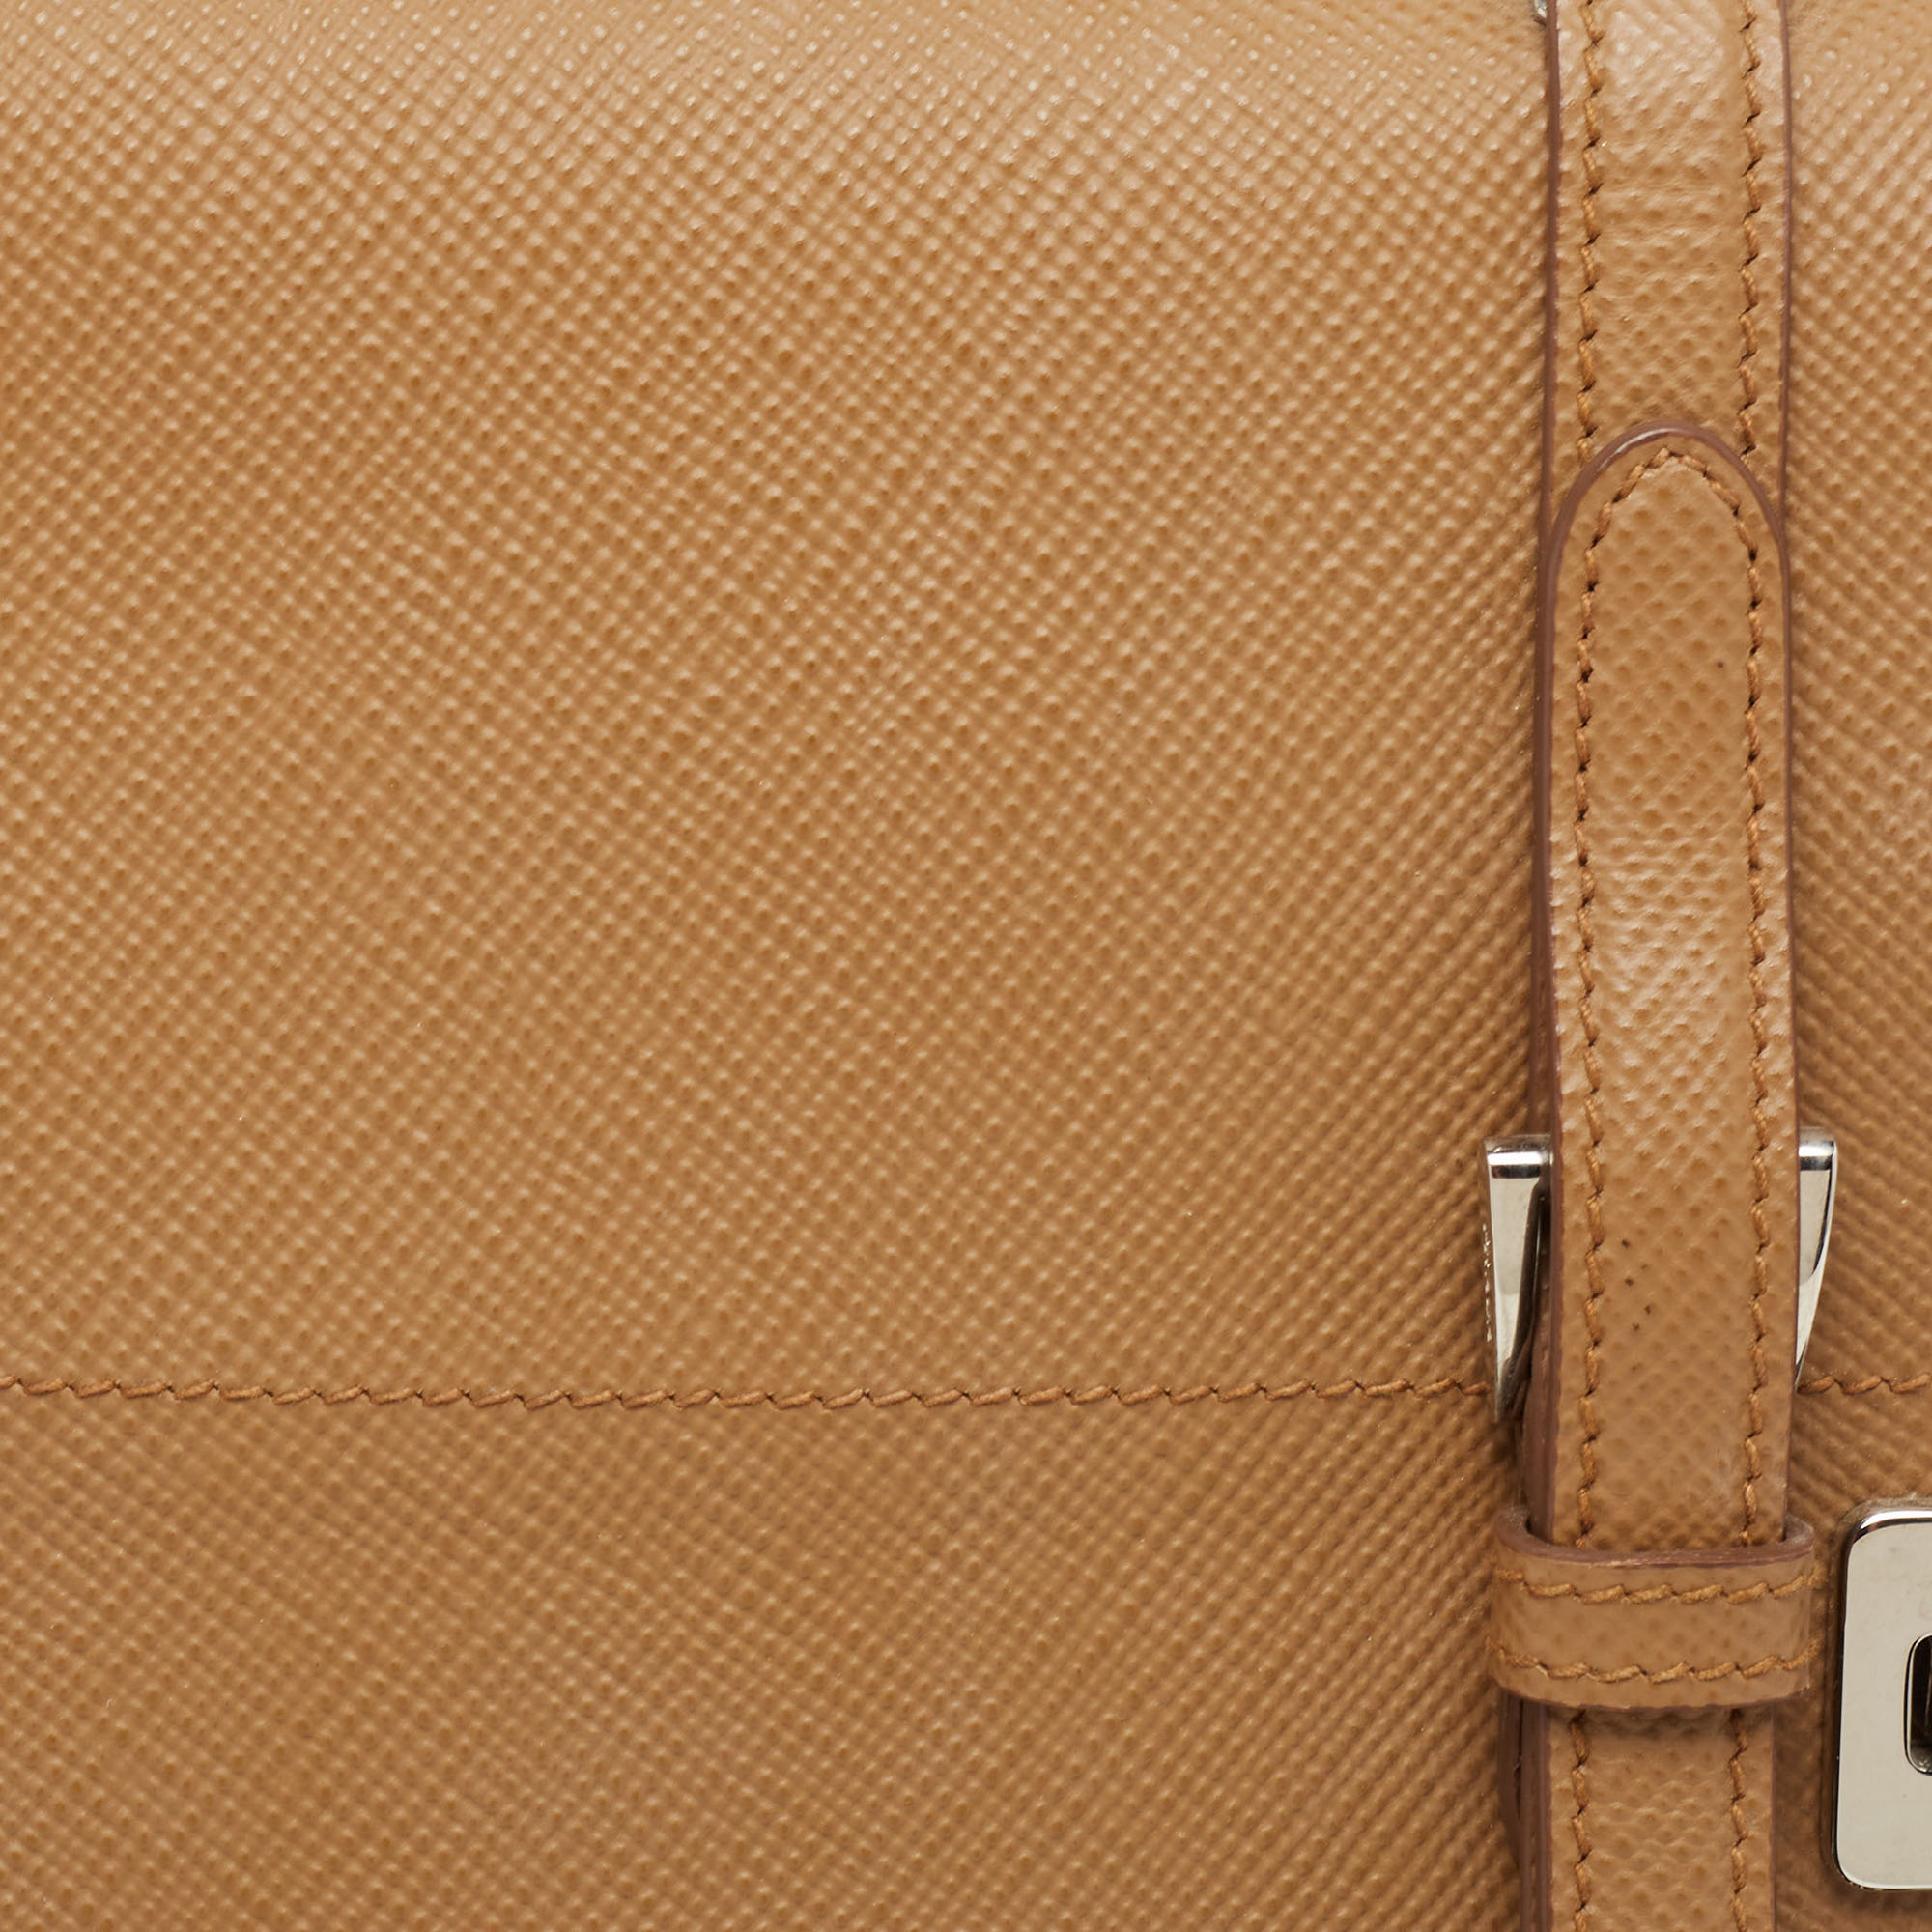 Prada Burgundy Saffiano Lux Leather Top Handle Bag